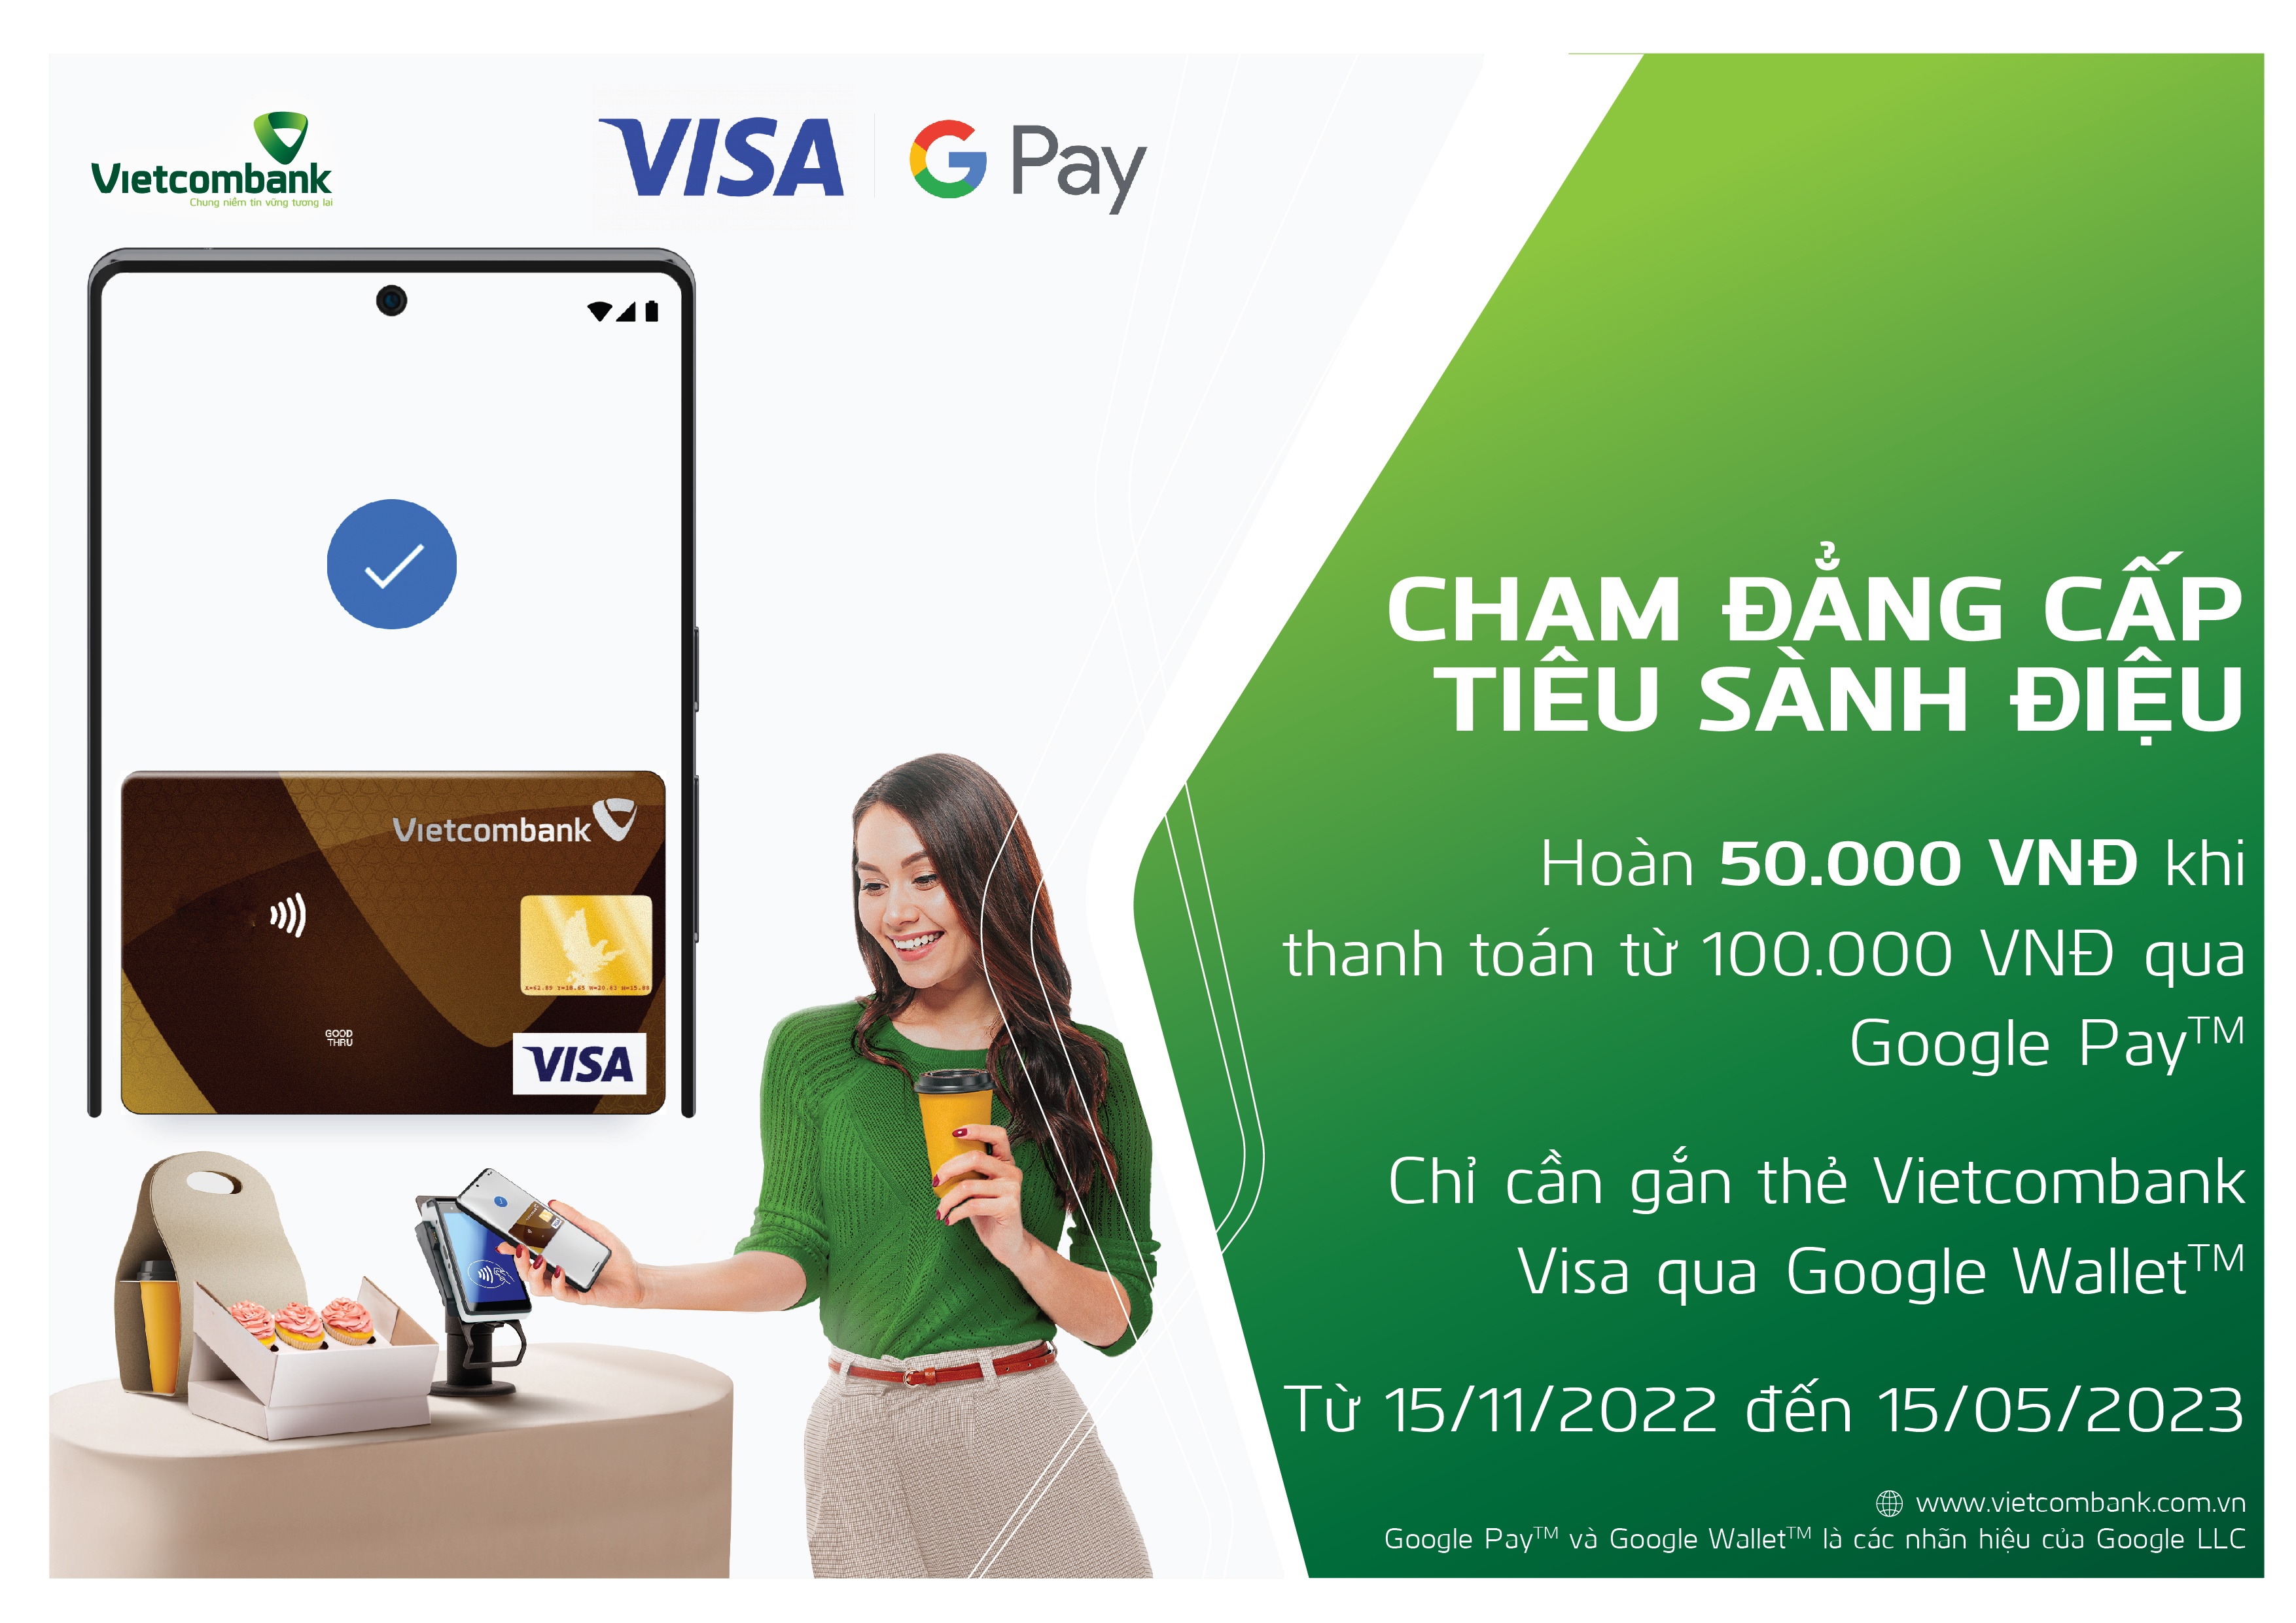 vietcombank trien khai dich vu thanh toan qua google wallet cho the visa